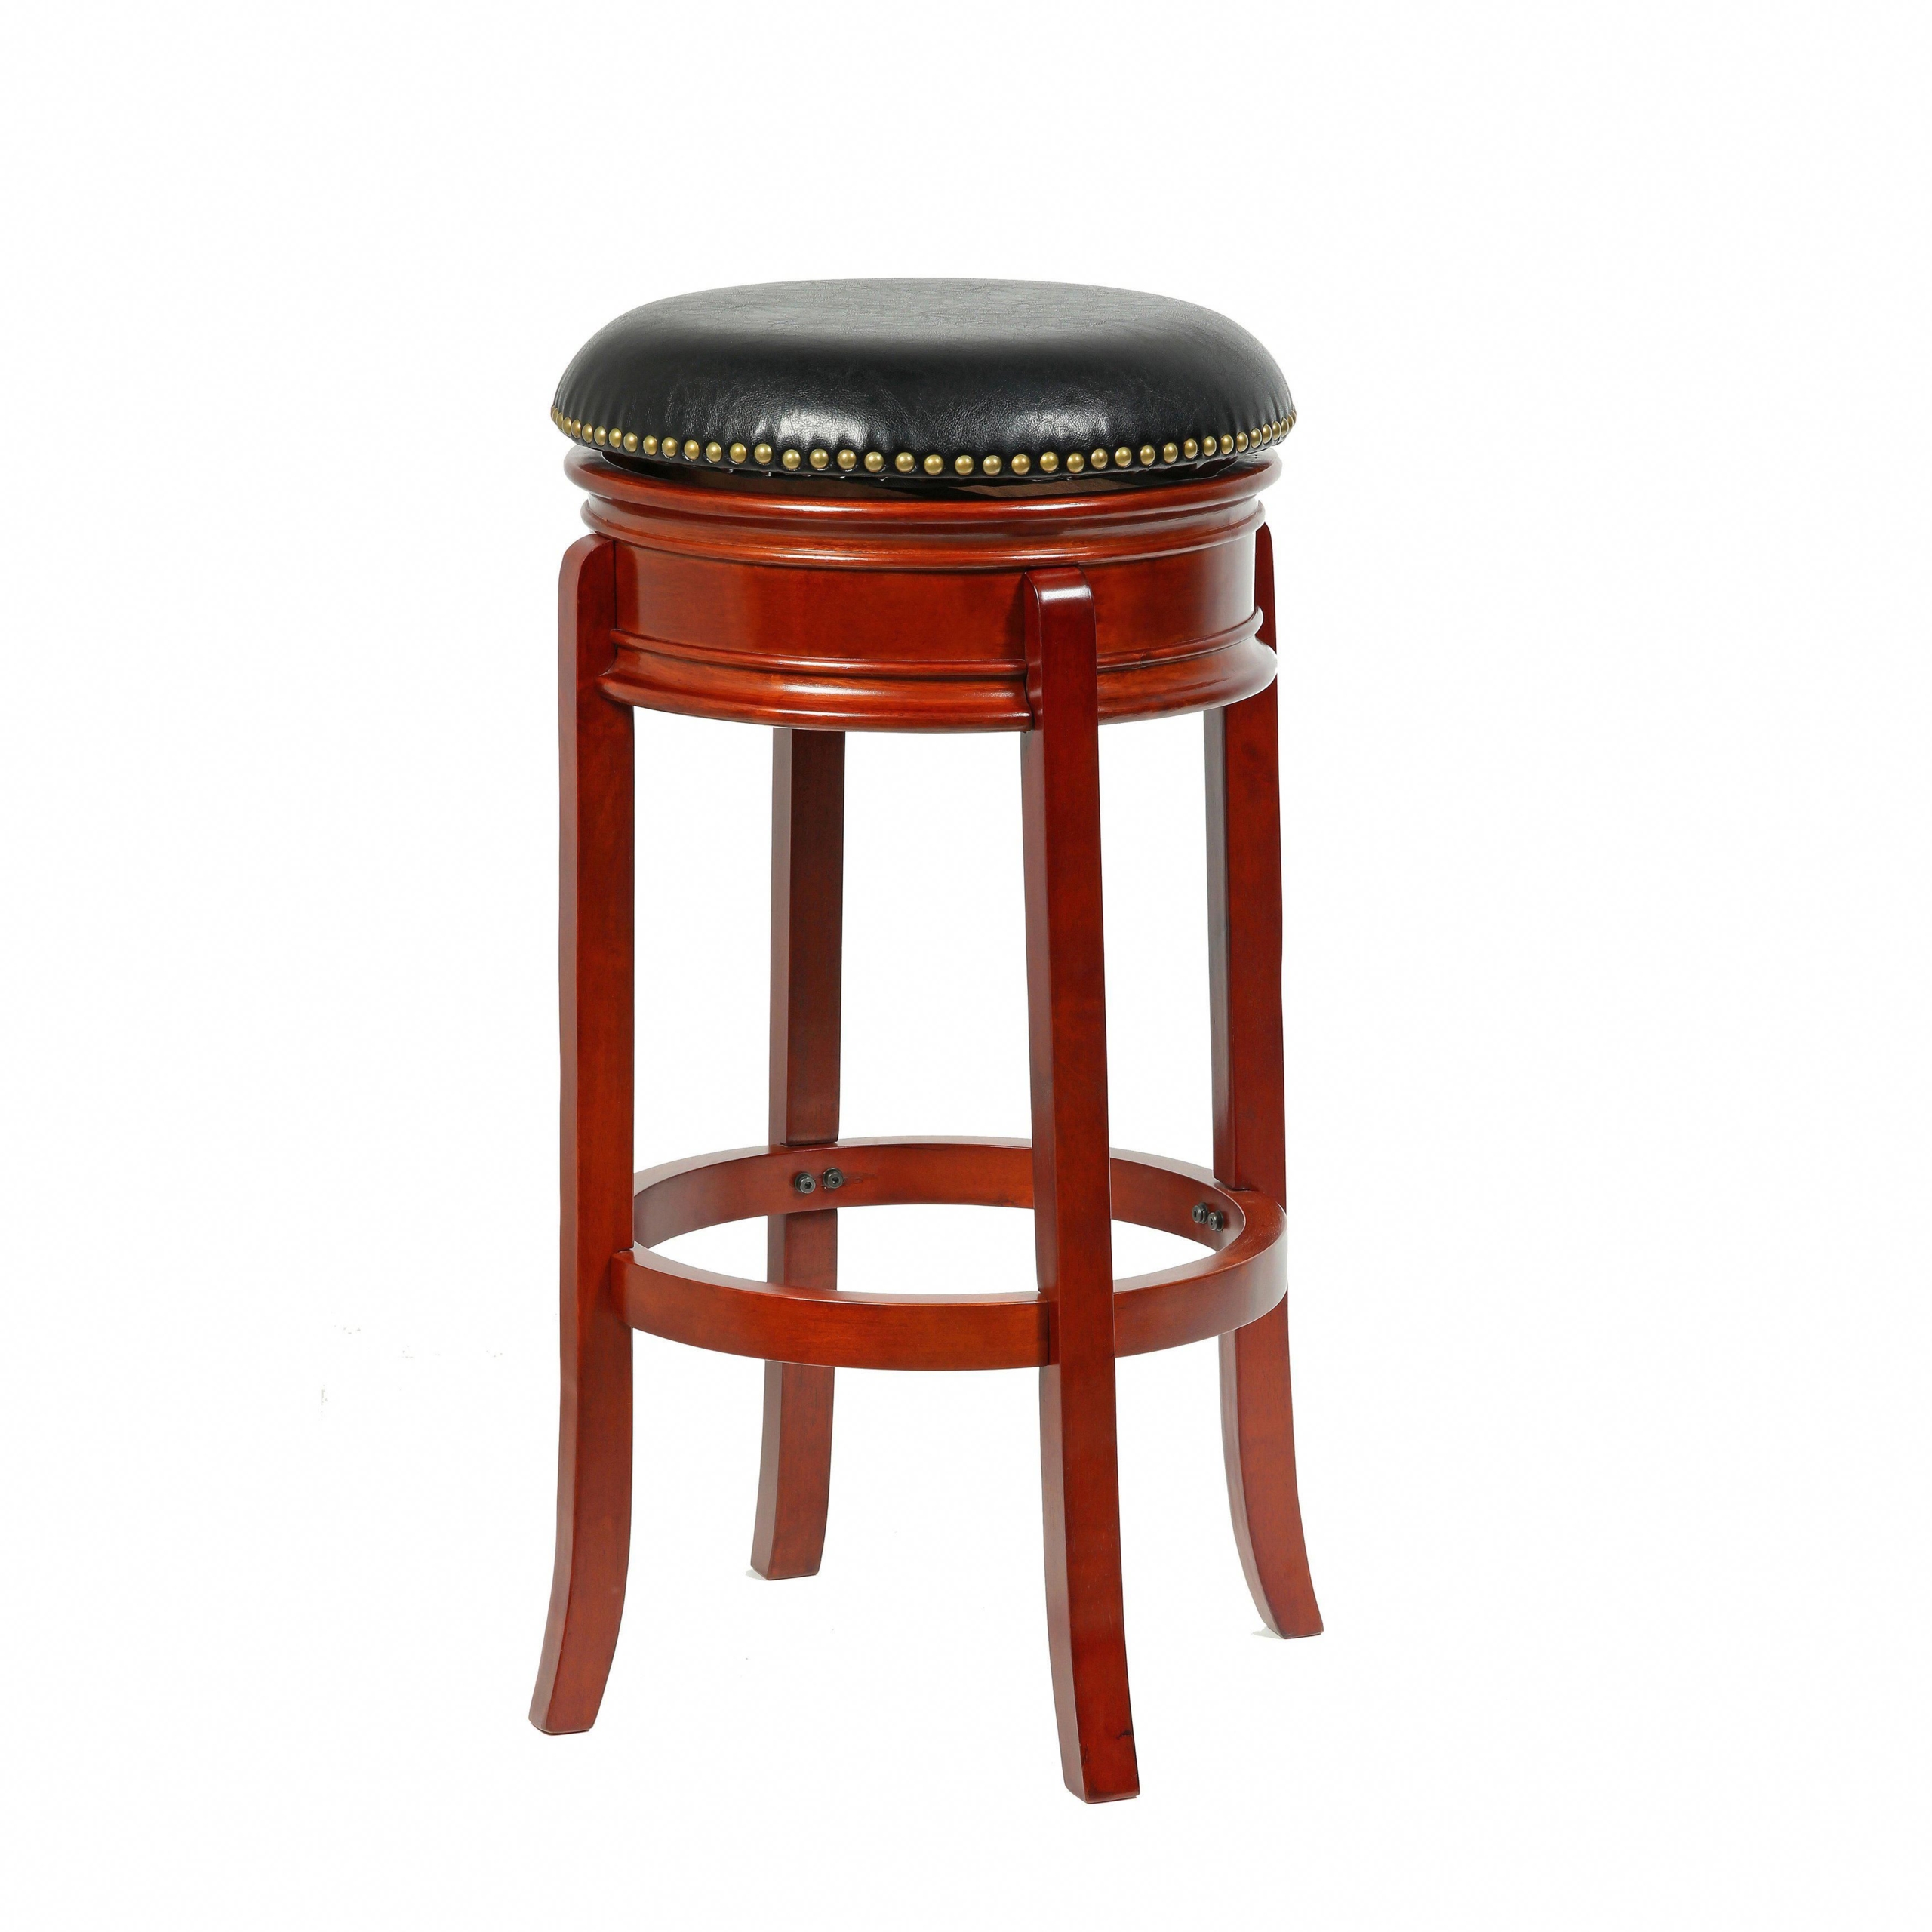 Solid wood swivel bar stools 3